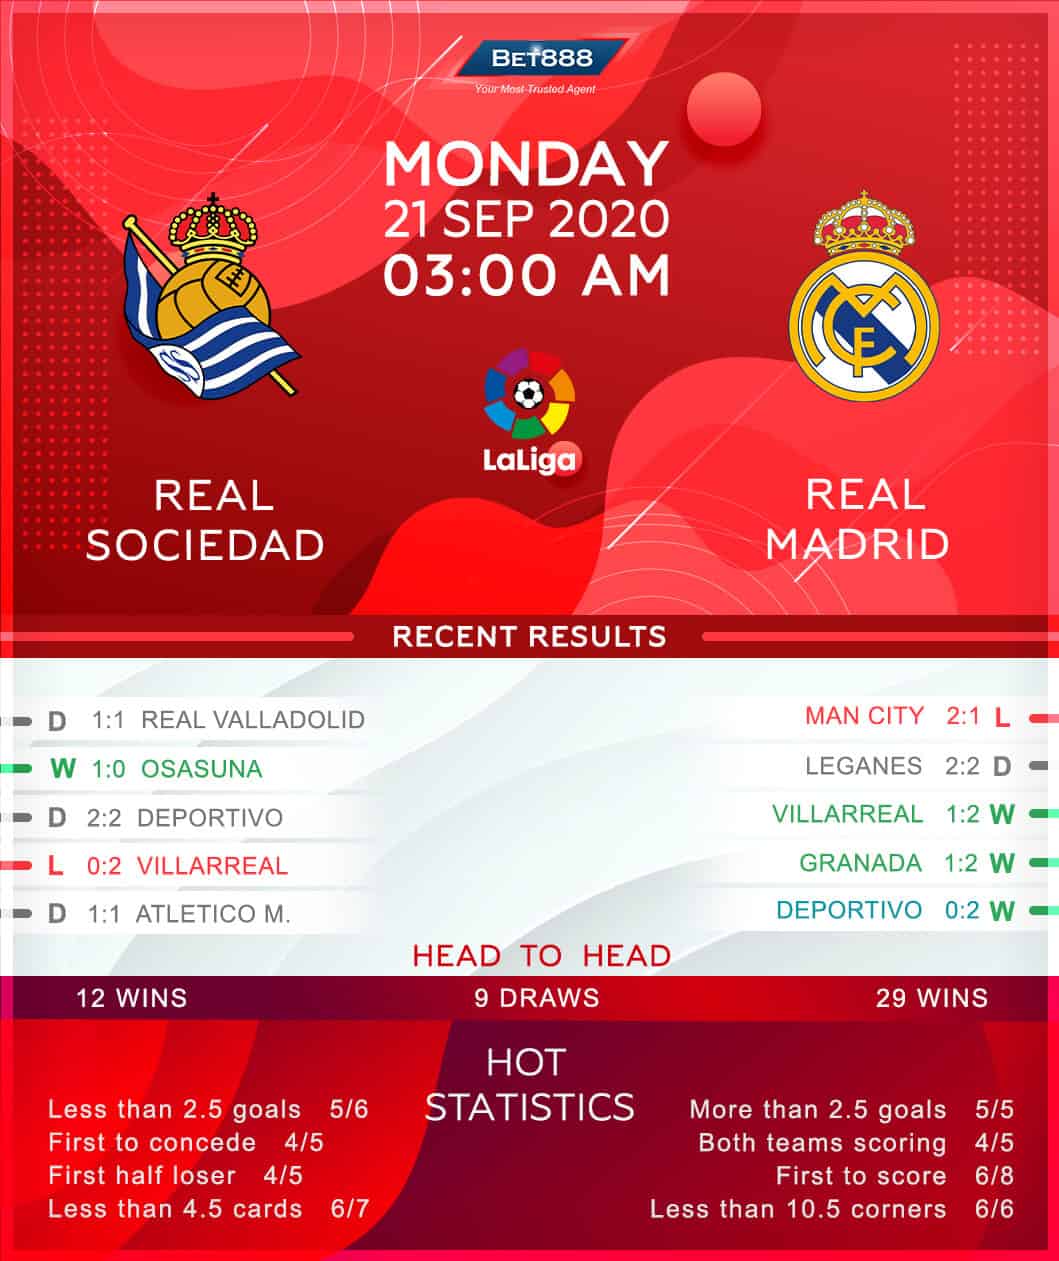 Real Sociedad vs Real Madrid﻿ 21/09/20